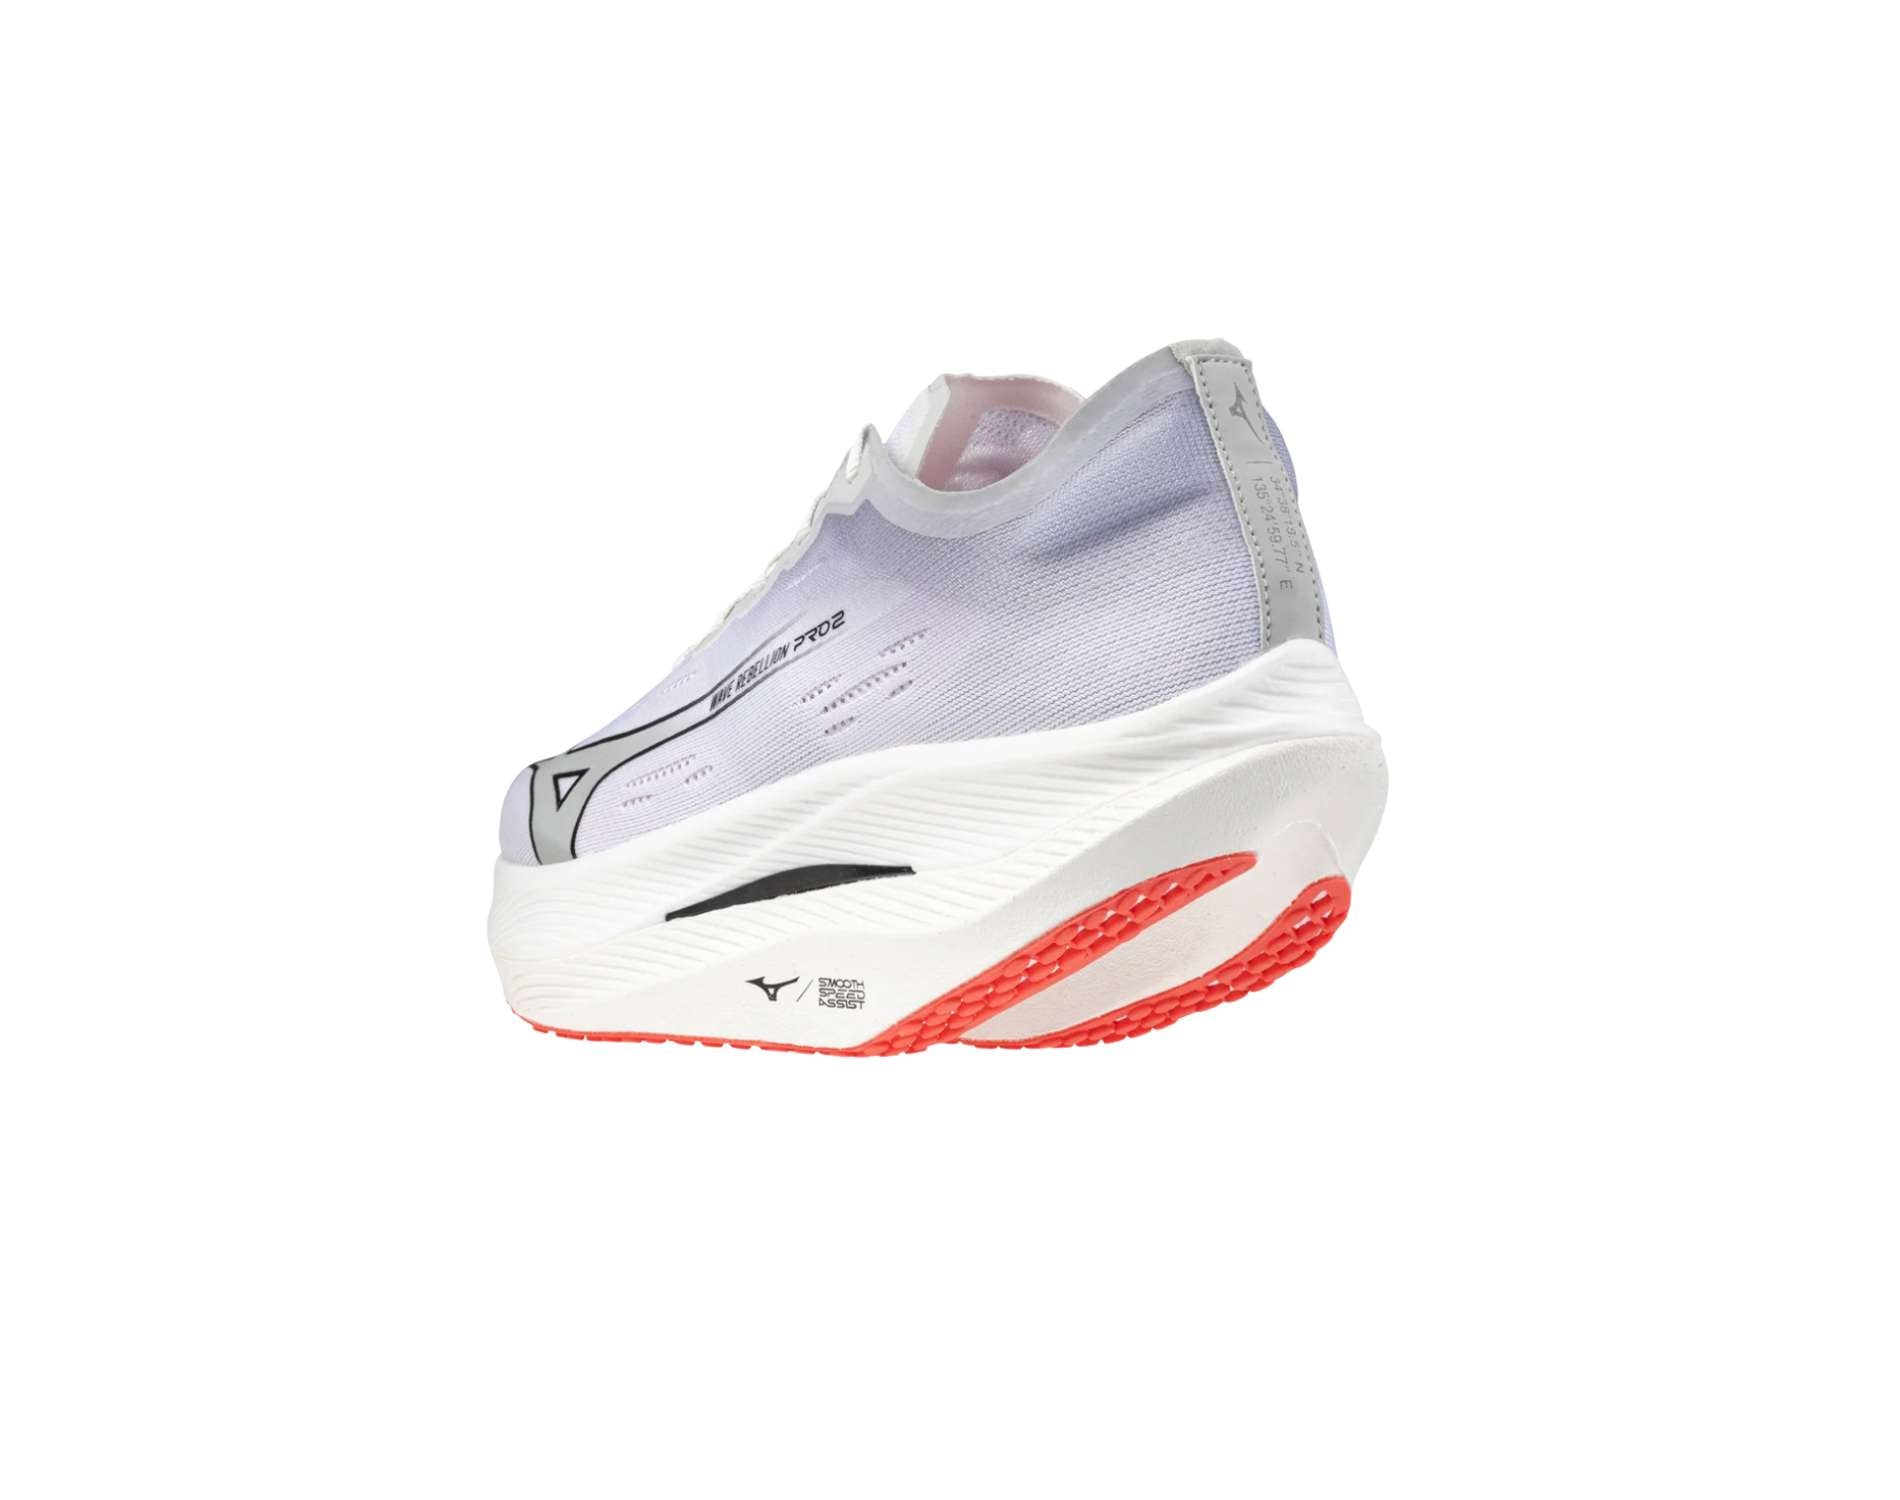 Mizuno Wave Rebellion Pro 2 Mens race shoe in standard width in white harbor mist cayenne 01 colour